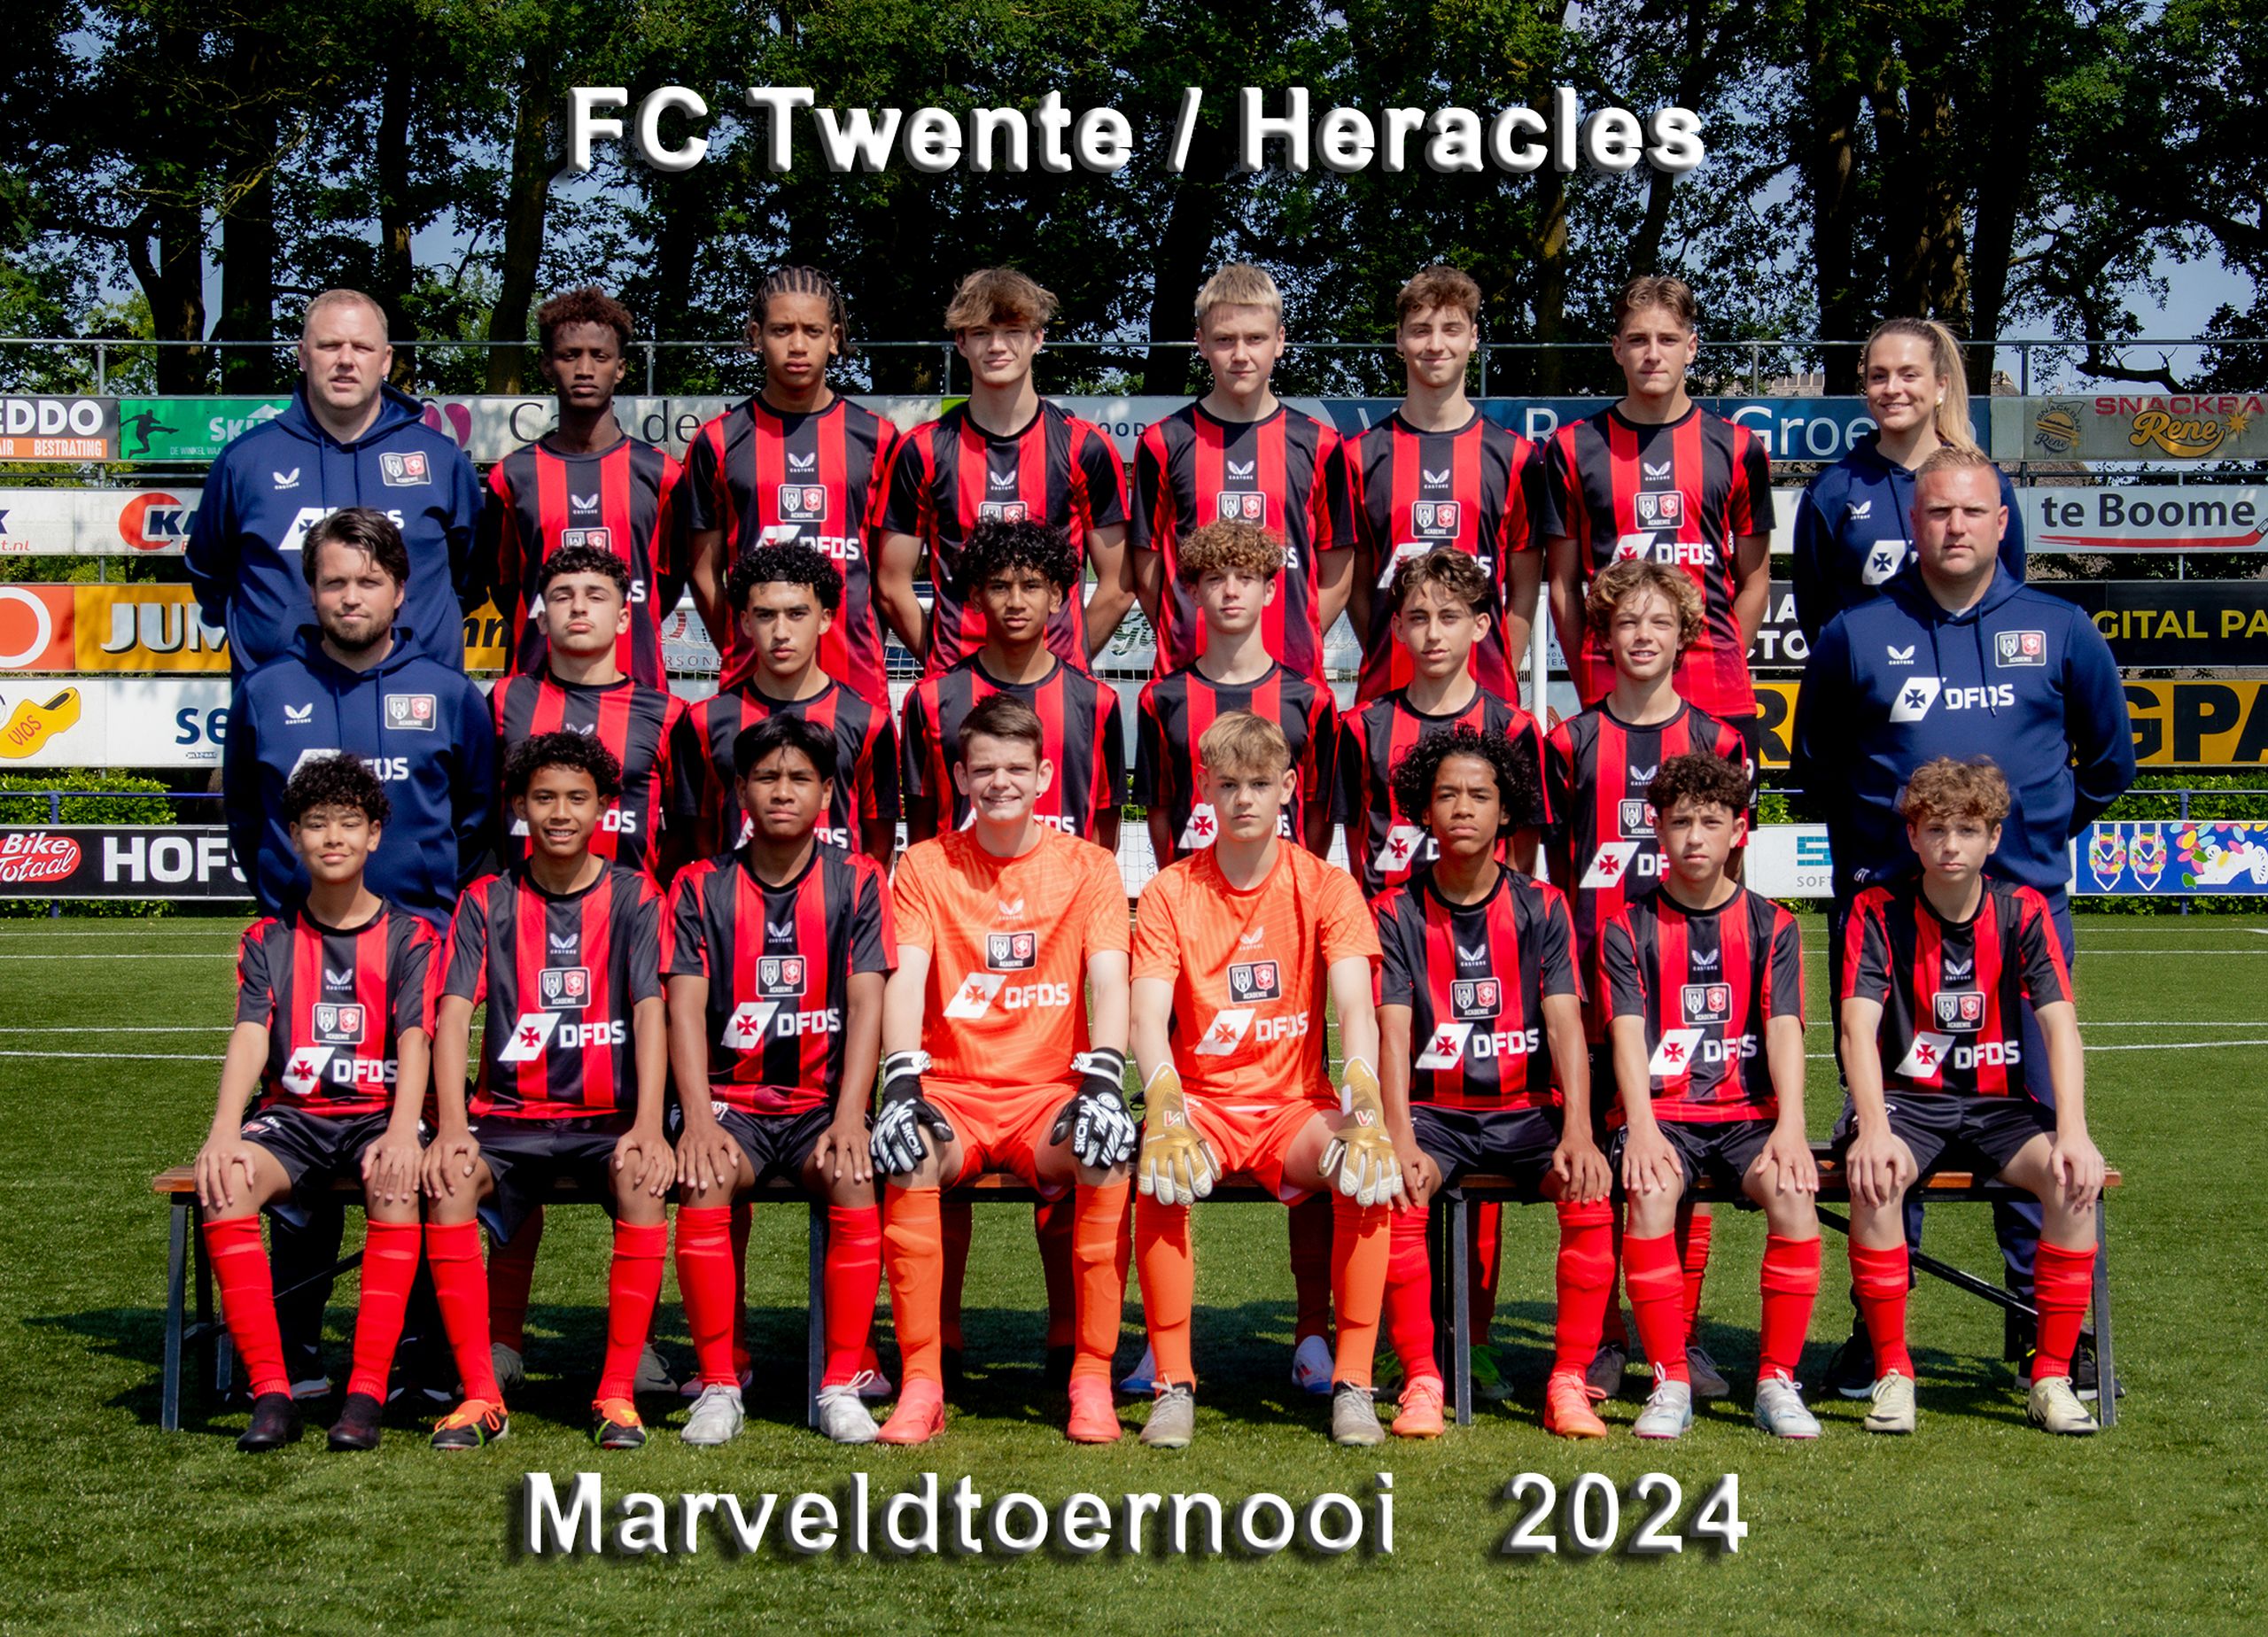 Marveld Tournament 2024 - Team FC Twente / Heracles